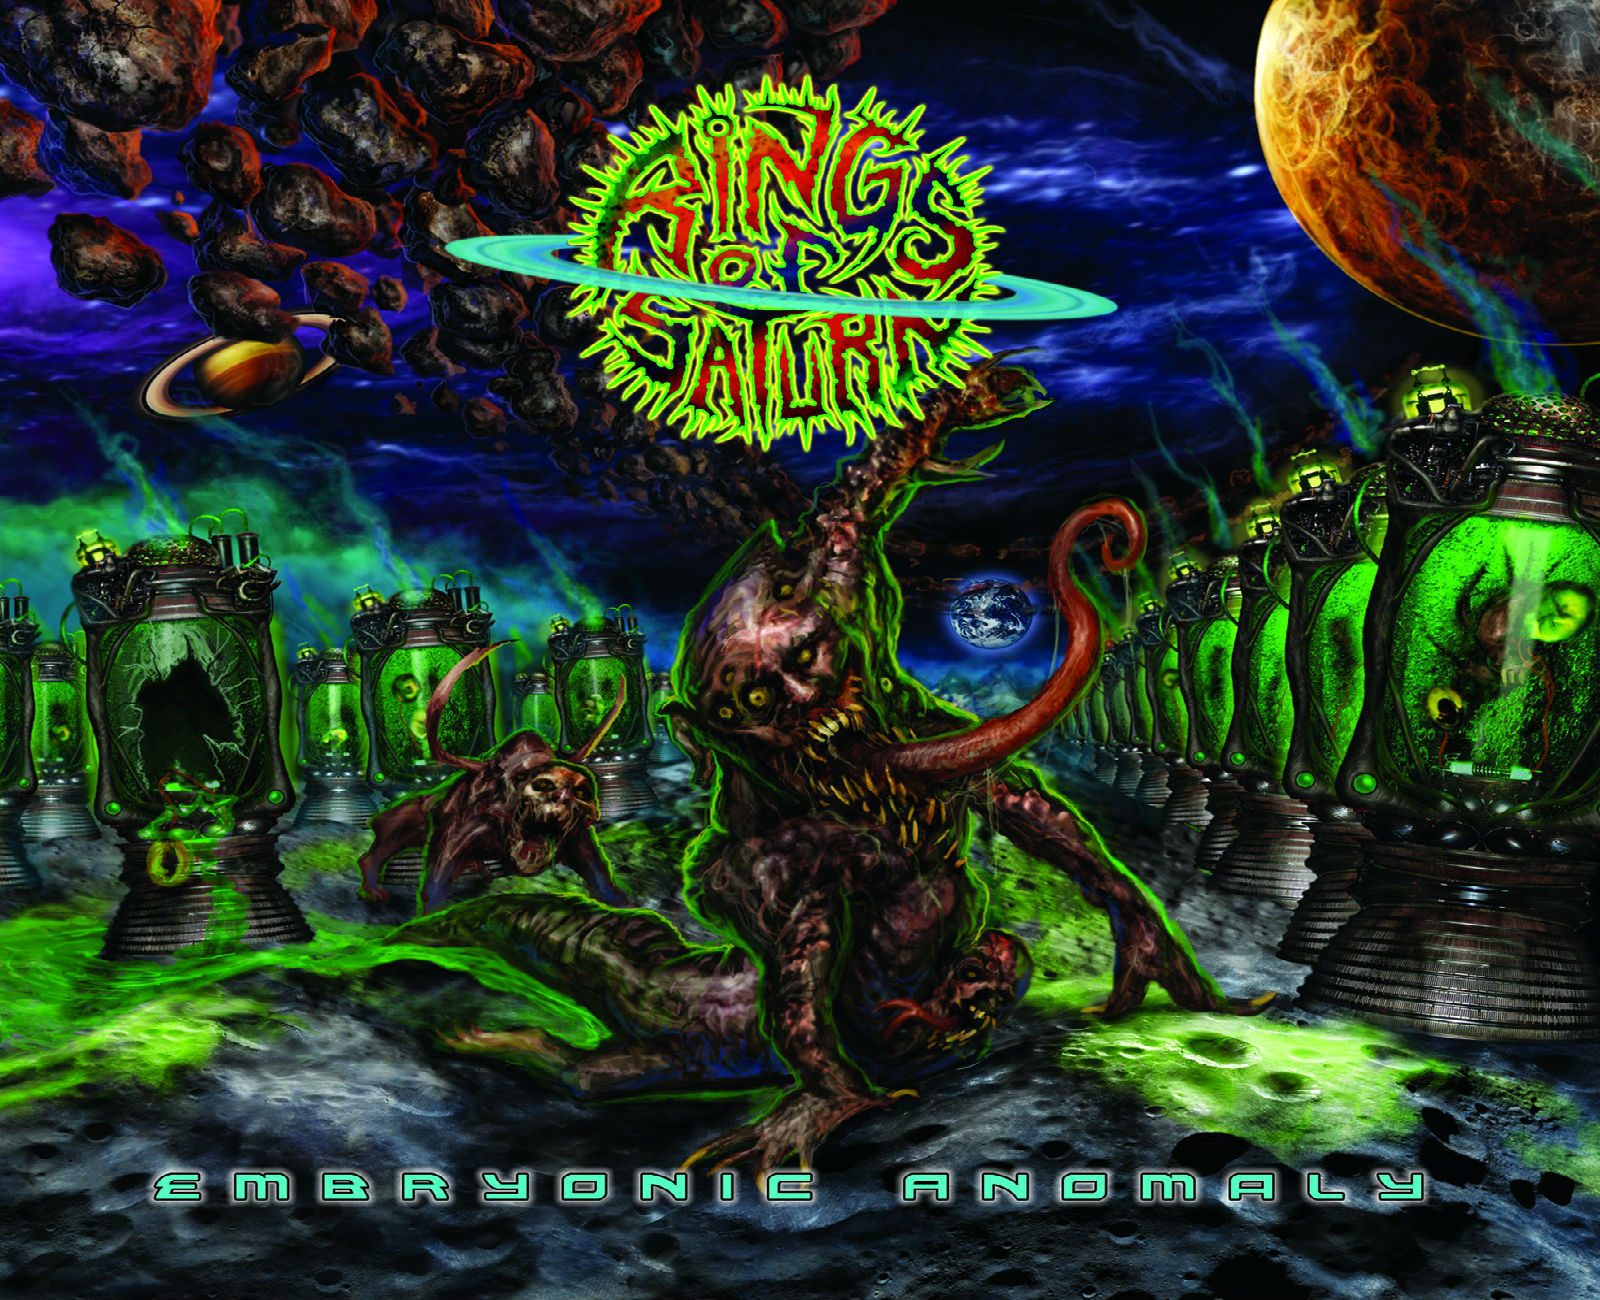 Rings Of Saturn death metal metalcore dark wallpaper background